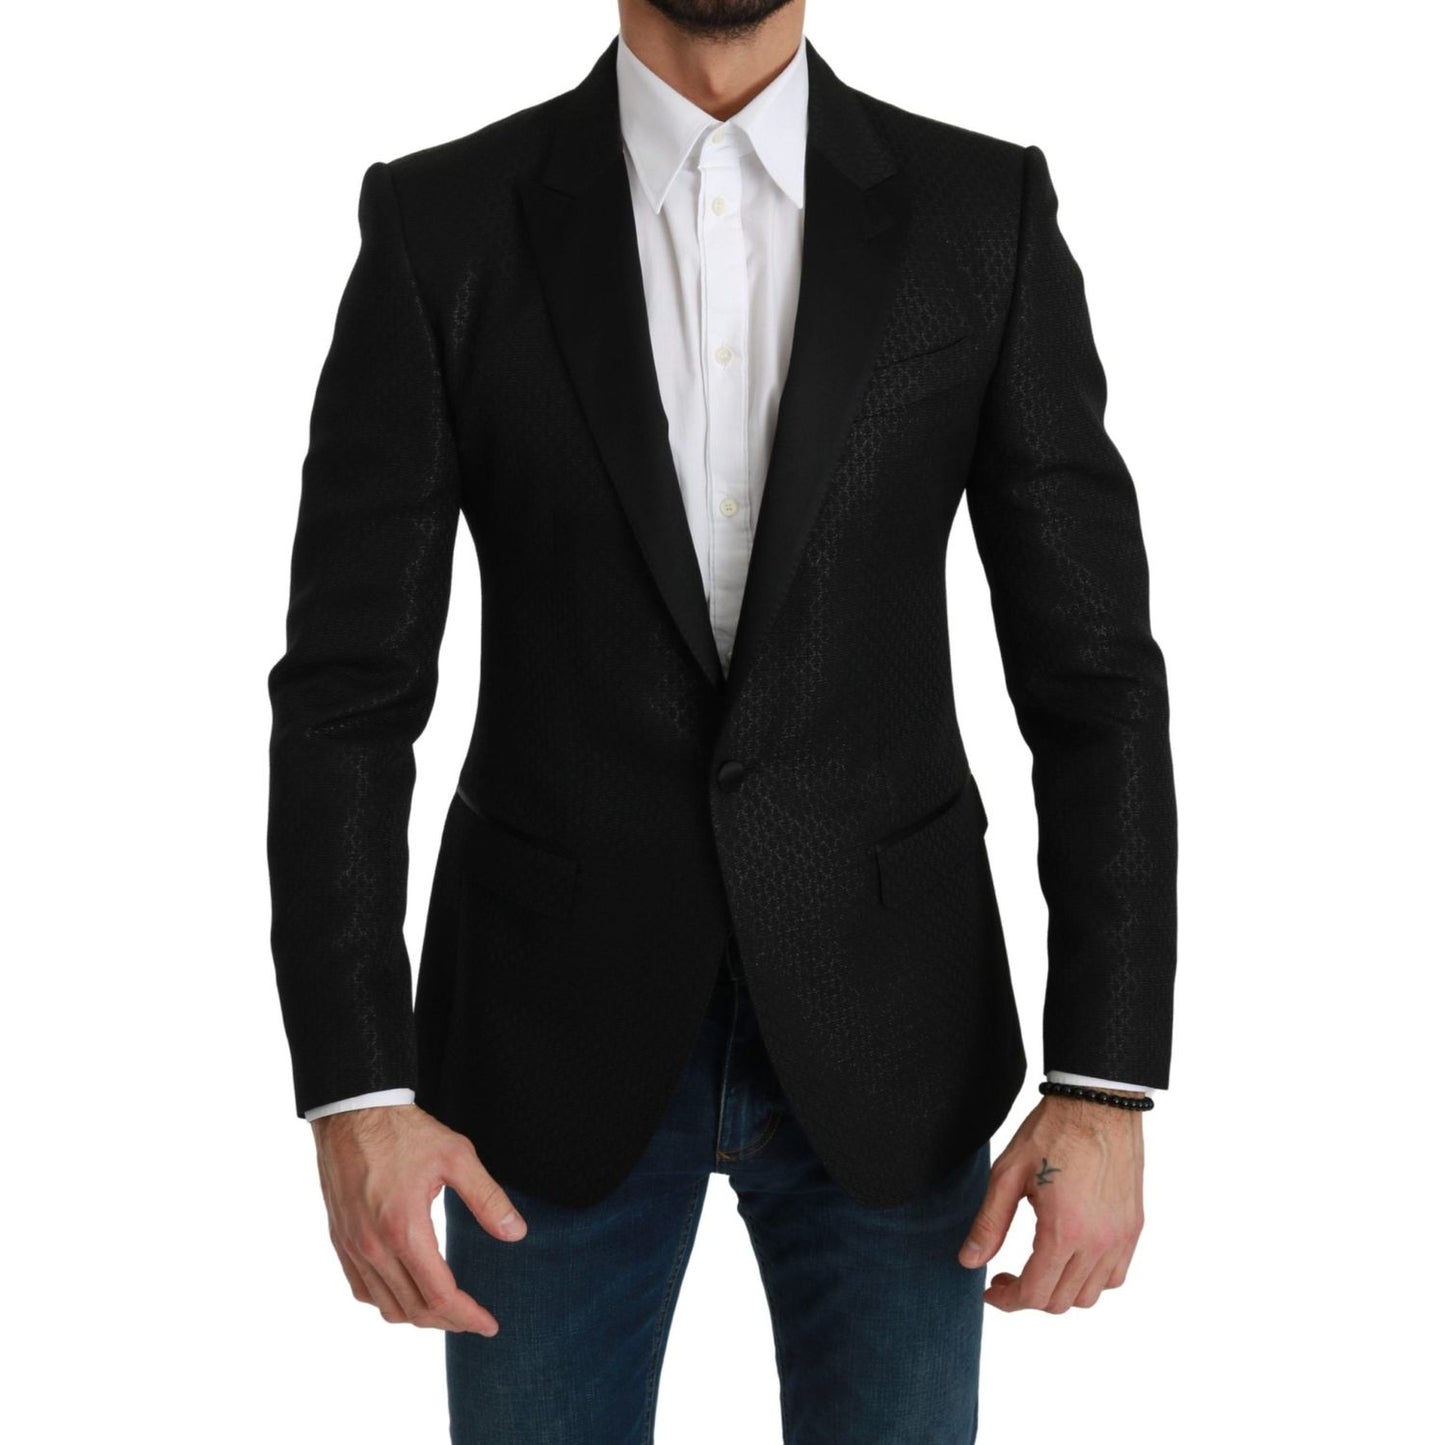 Dolce & Gabbana Slim Fit Martini Black Blazer Jacket Suit black-slim-fit-jacket-martini-blazer IMG_1013-scaled-7e4e80ca-4c8.jpg